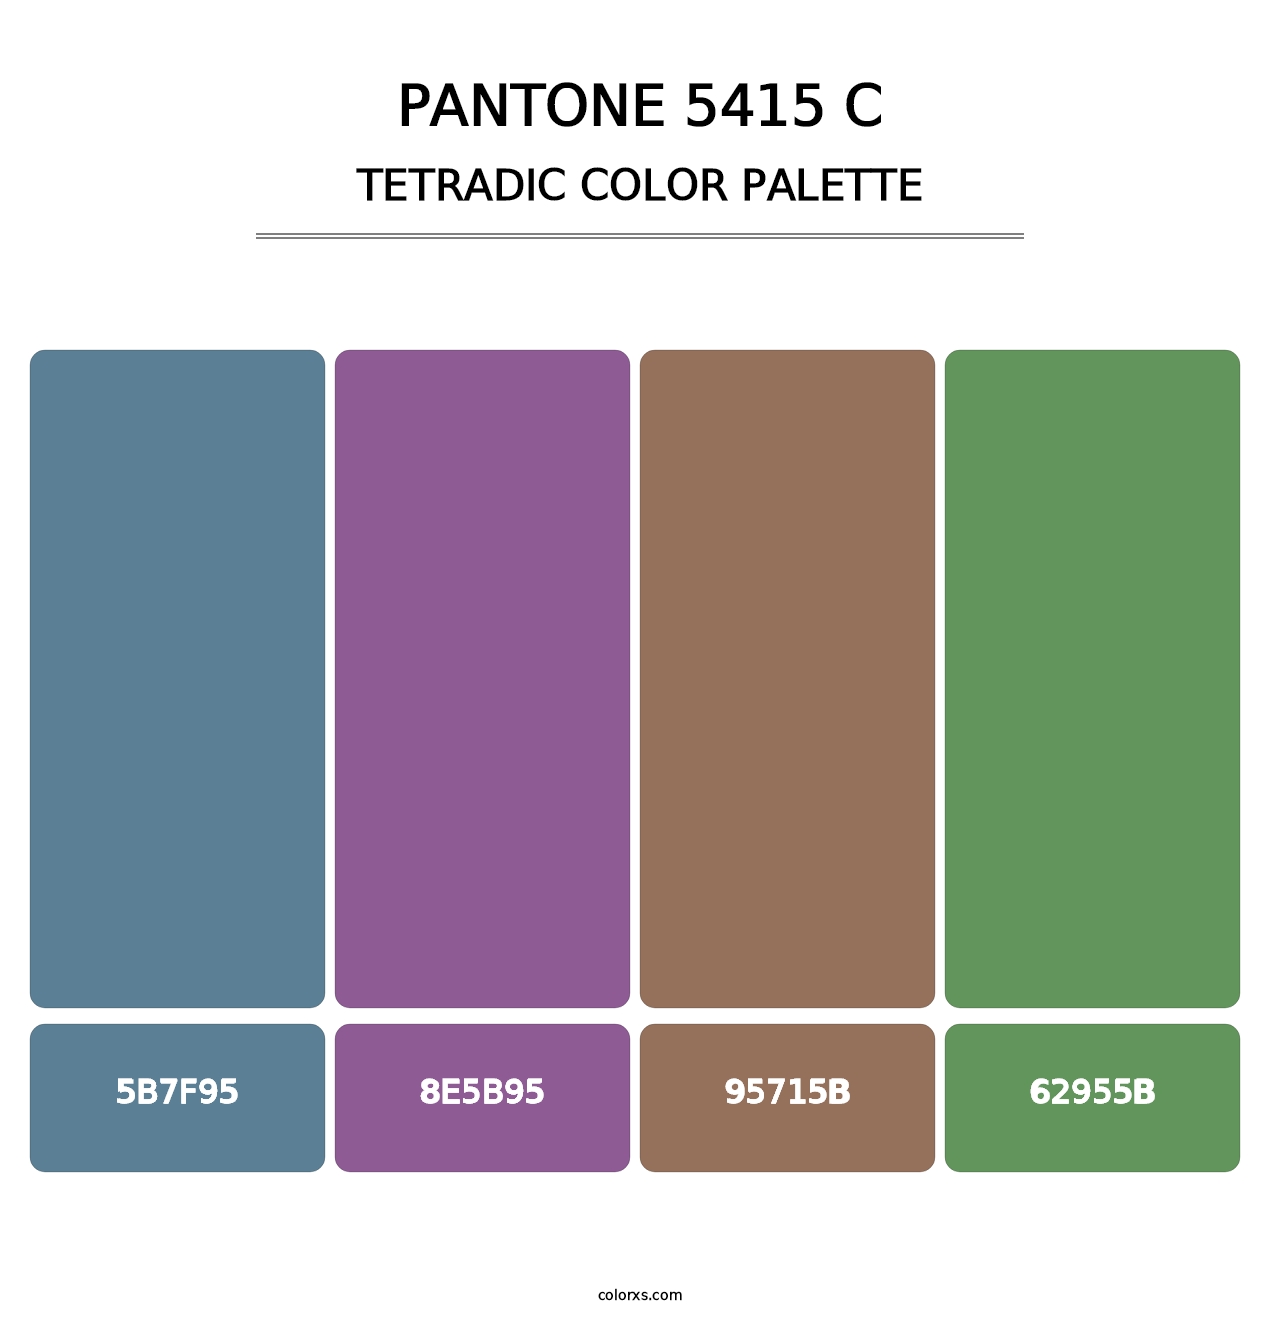 PANTONE 5415 C - Tetradic Color Palette